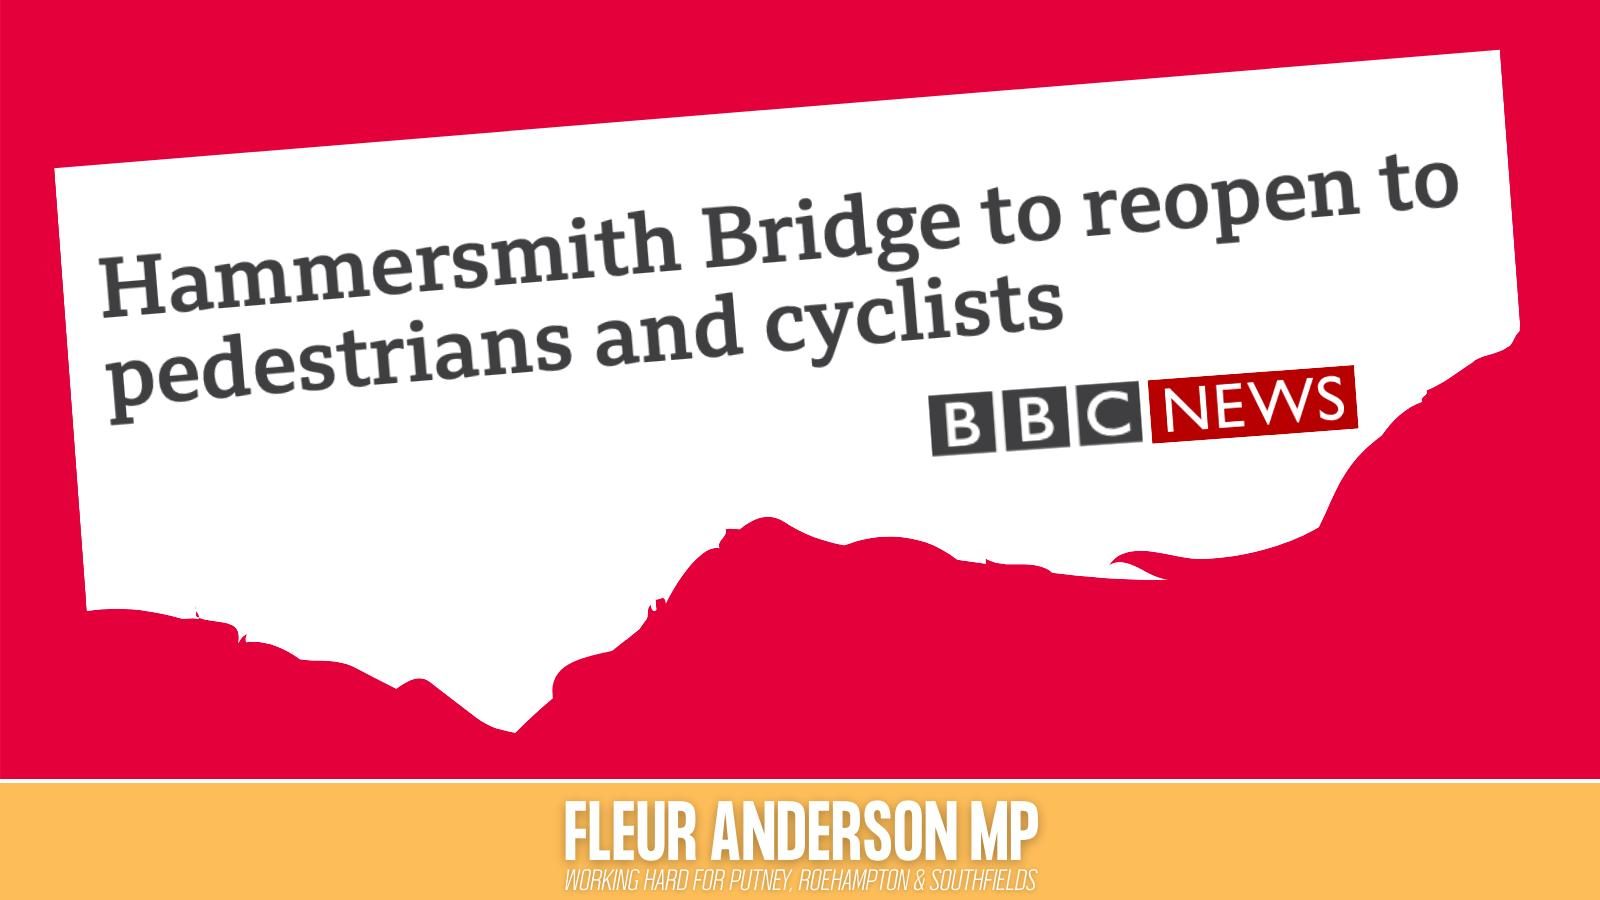 Hammersmith Bridge News